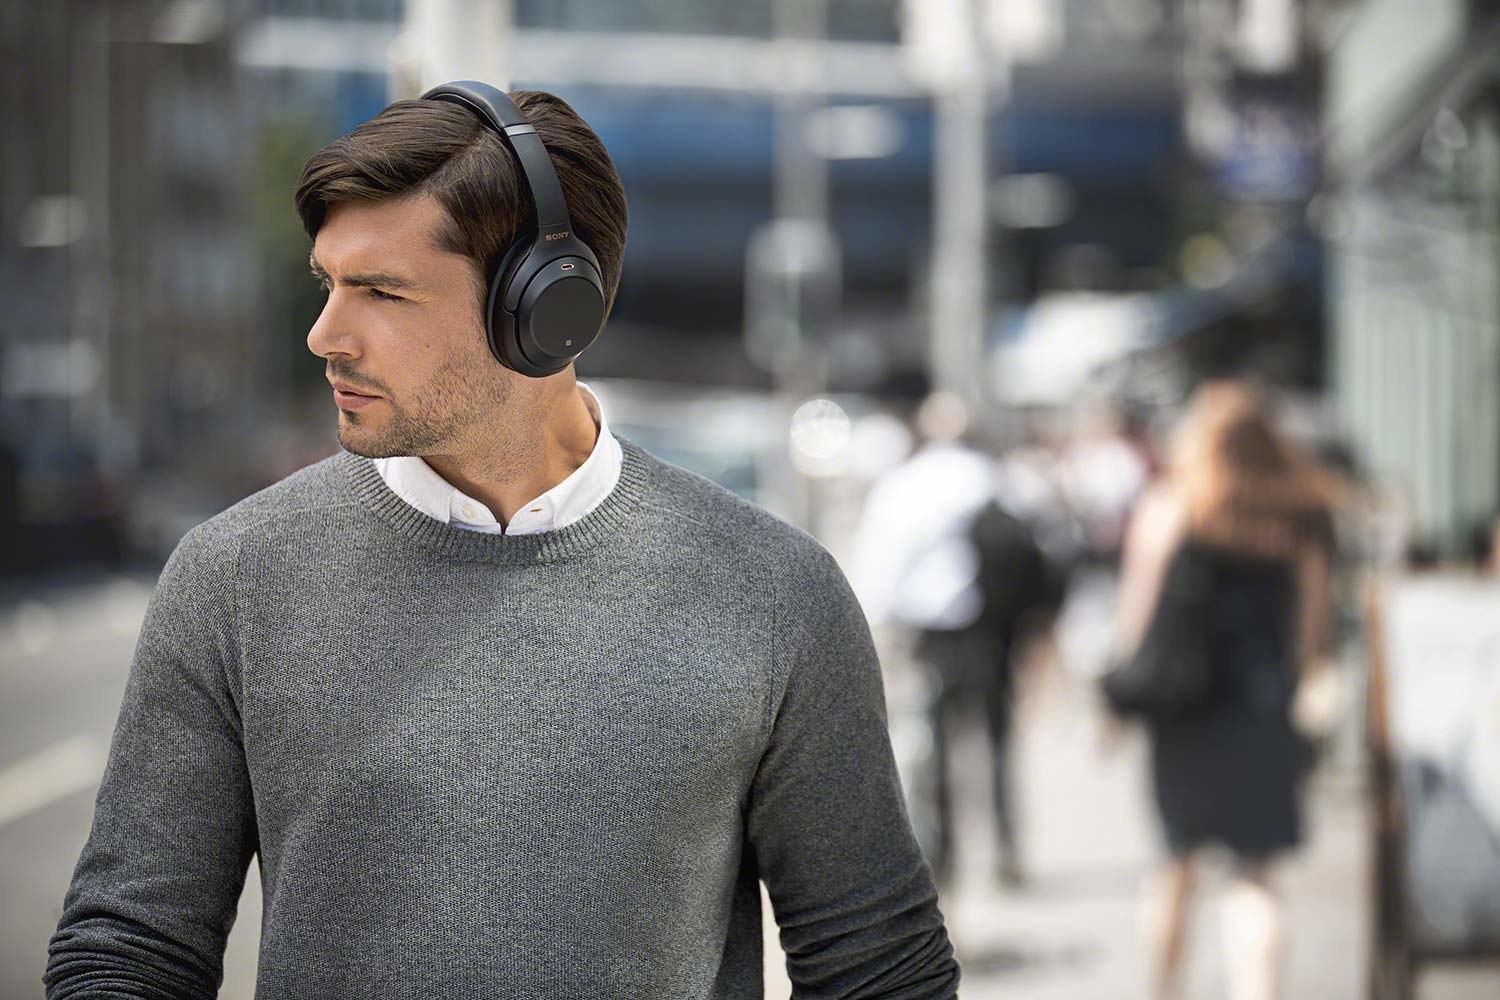 A man wearing the Sony headphones